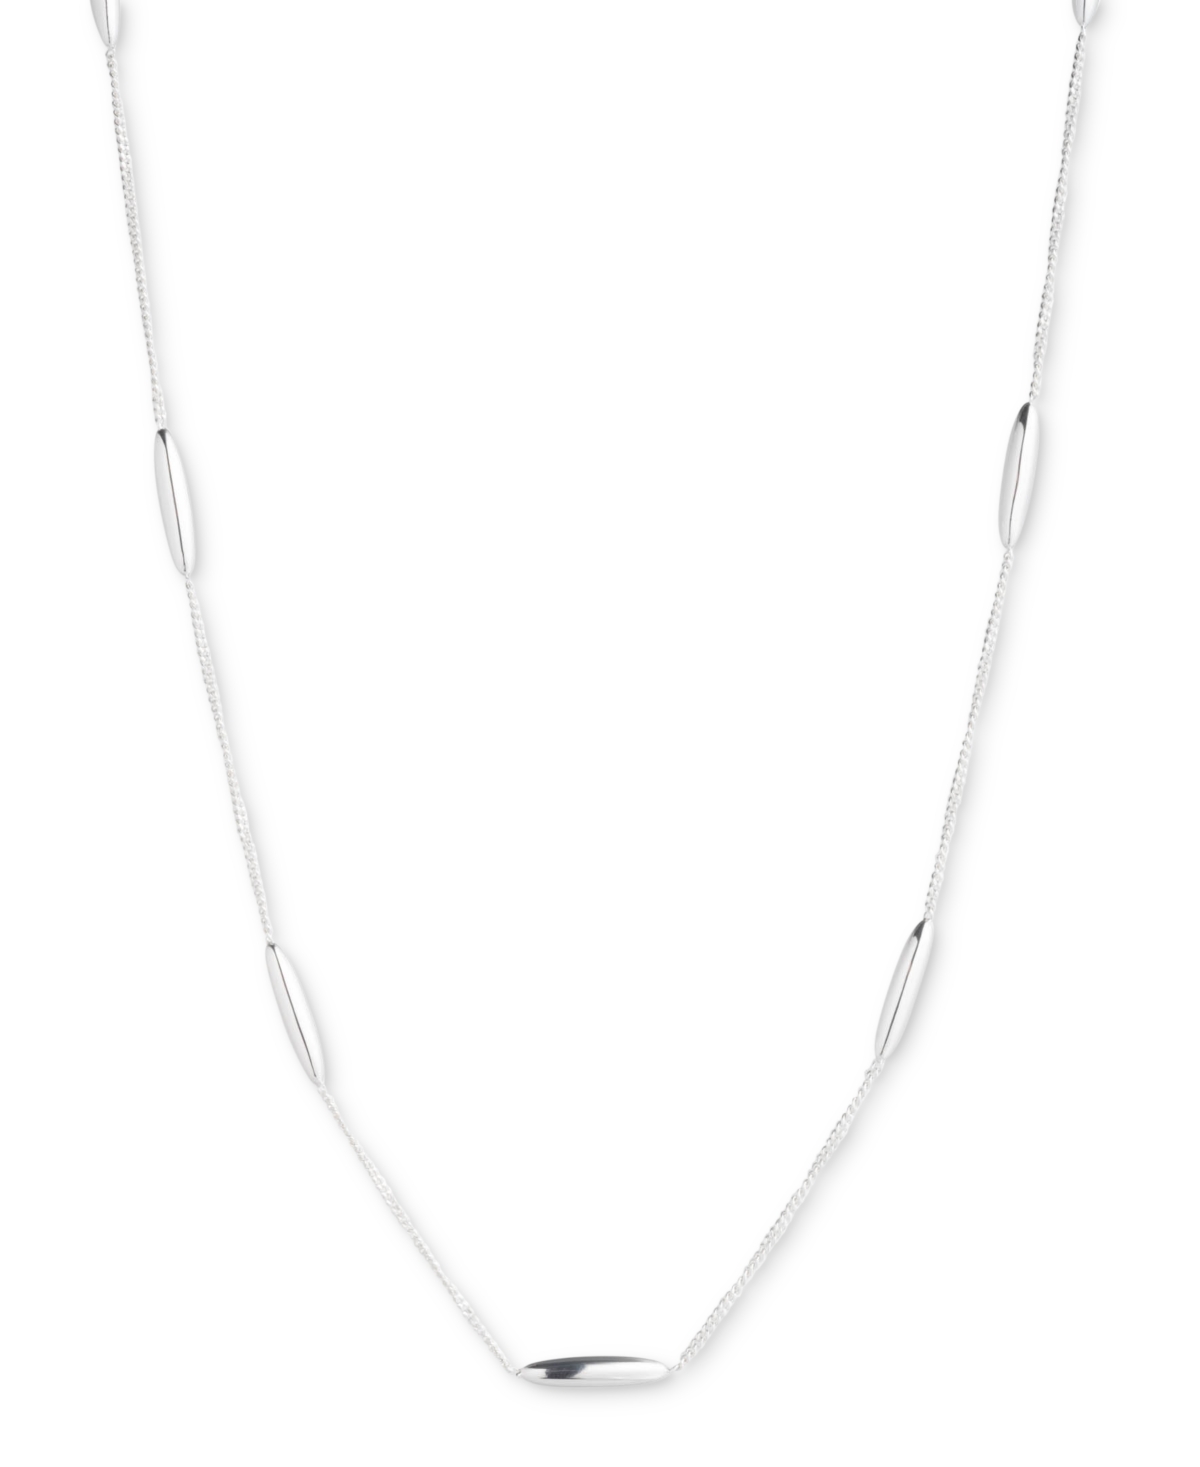 Lauren Ralph Lauren Sterling Silver Bar Station Collar Necklace, 15" + 3" extender - Silver